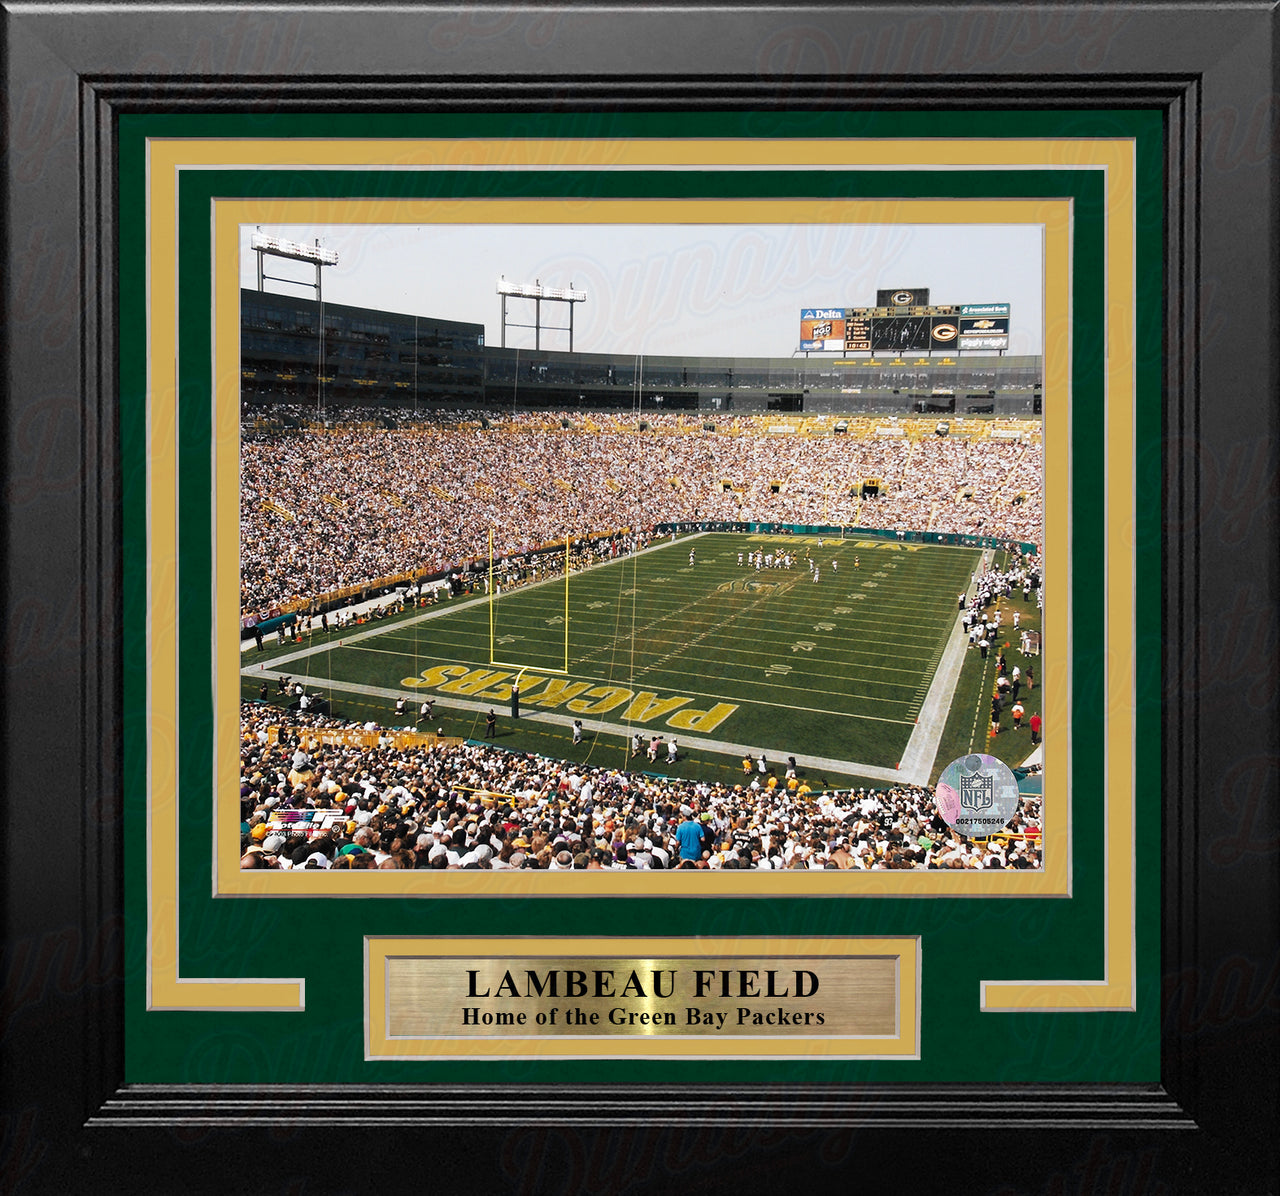 Green Bay Packers Lambeau Field 8" x 10" Framed Football Stadium Photo - Dynasty Sports & Framing 